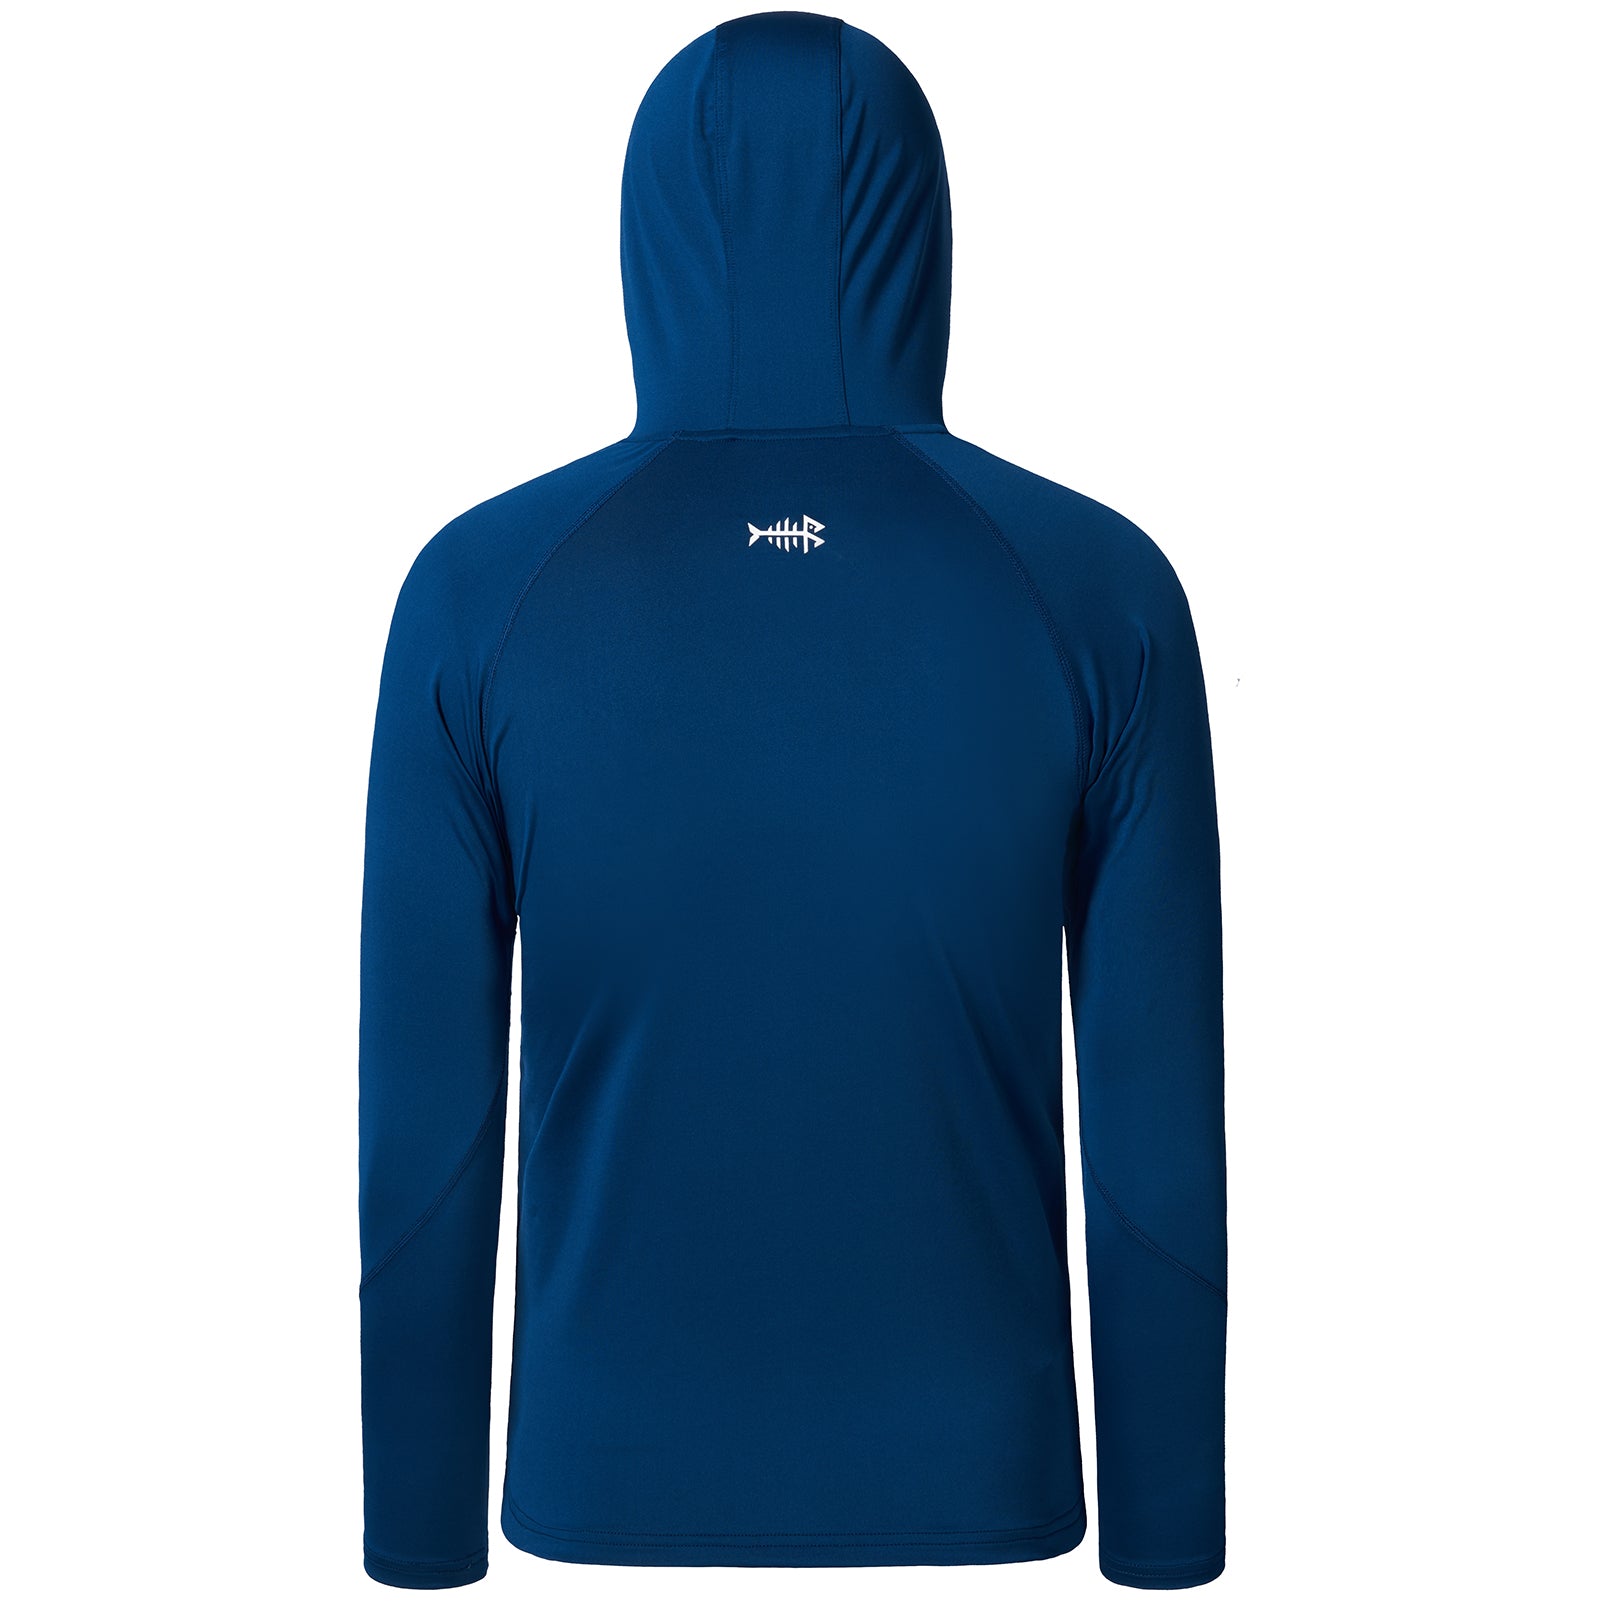 Lowrance Men's Blue Fishing Hoodie Sweatshirt Size: 3XL